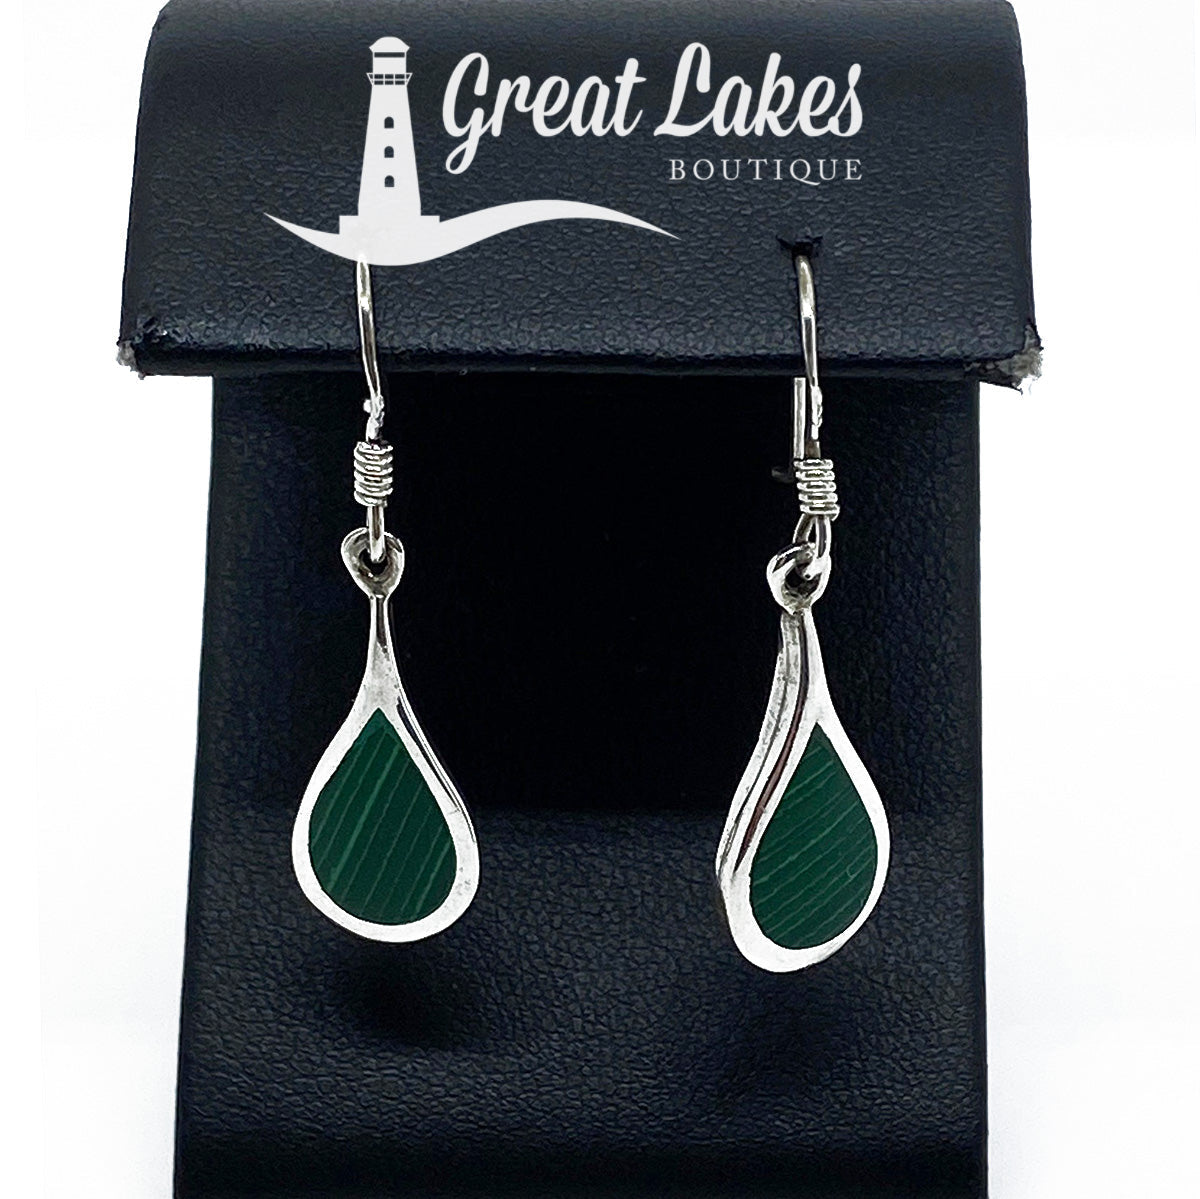 Great Lakes Boutique Silver &amp; Malachite Dangle Earrings